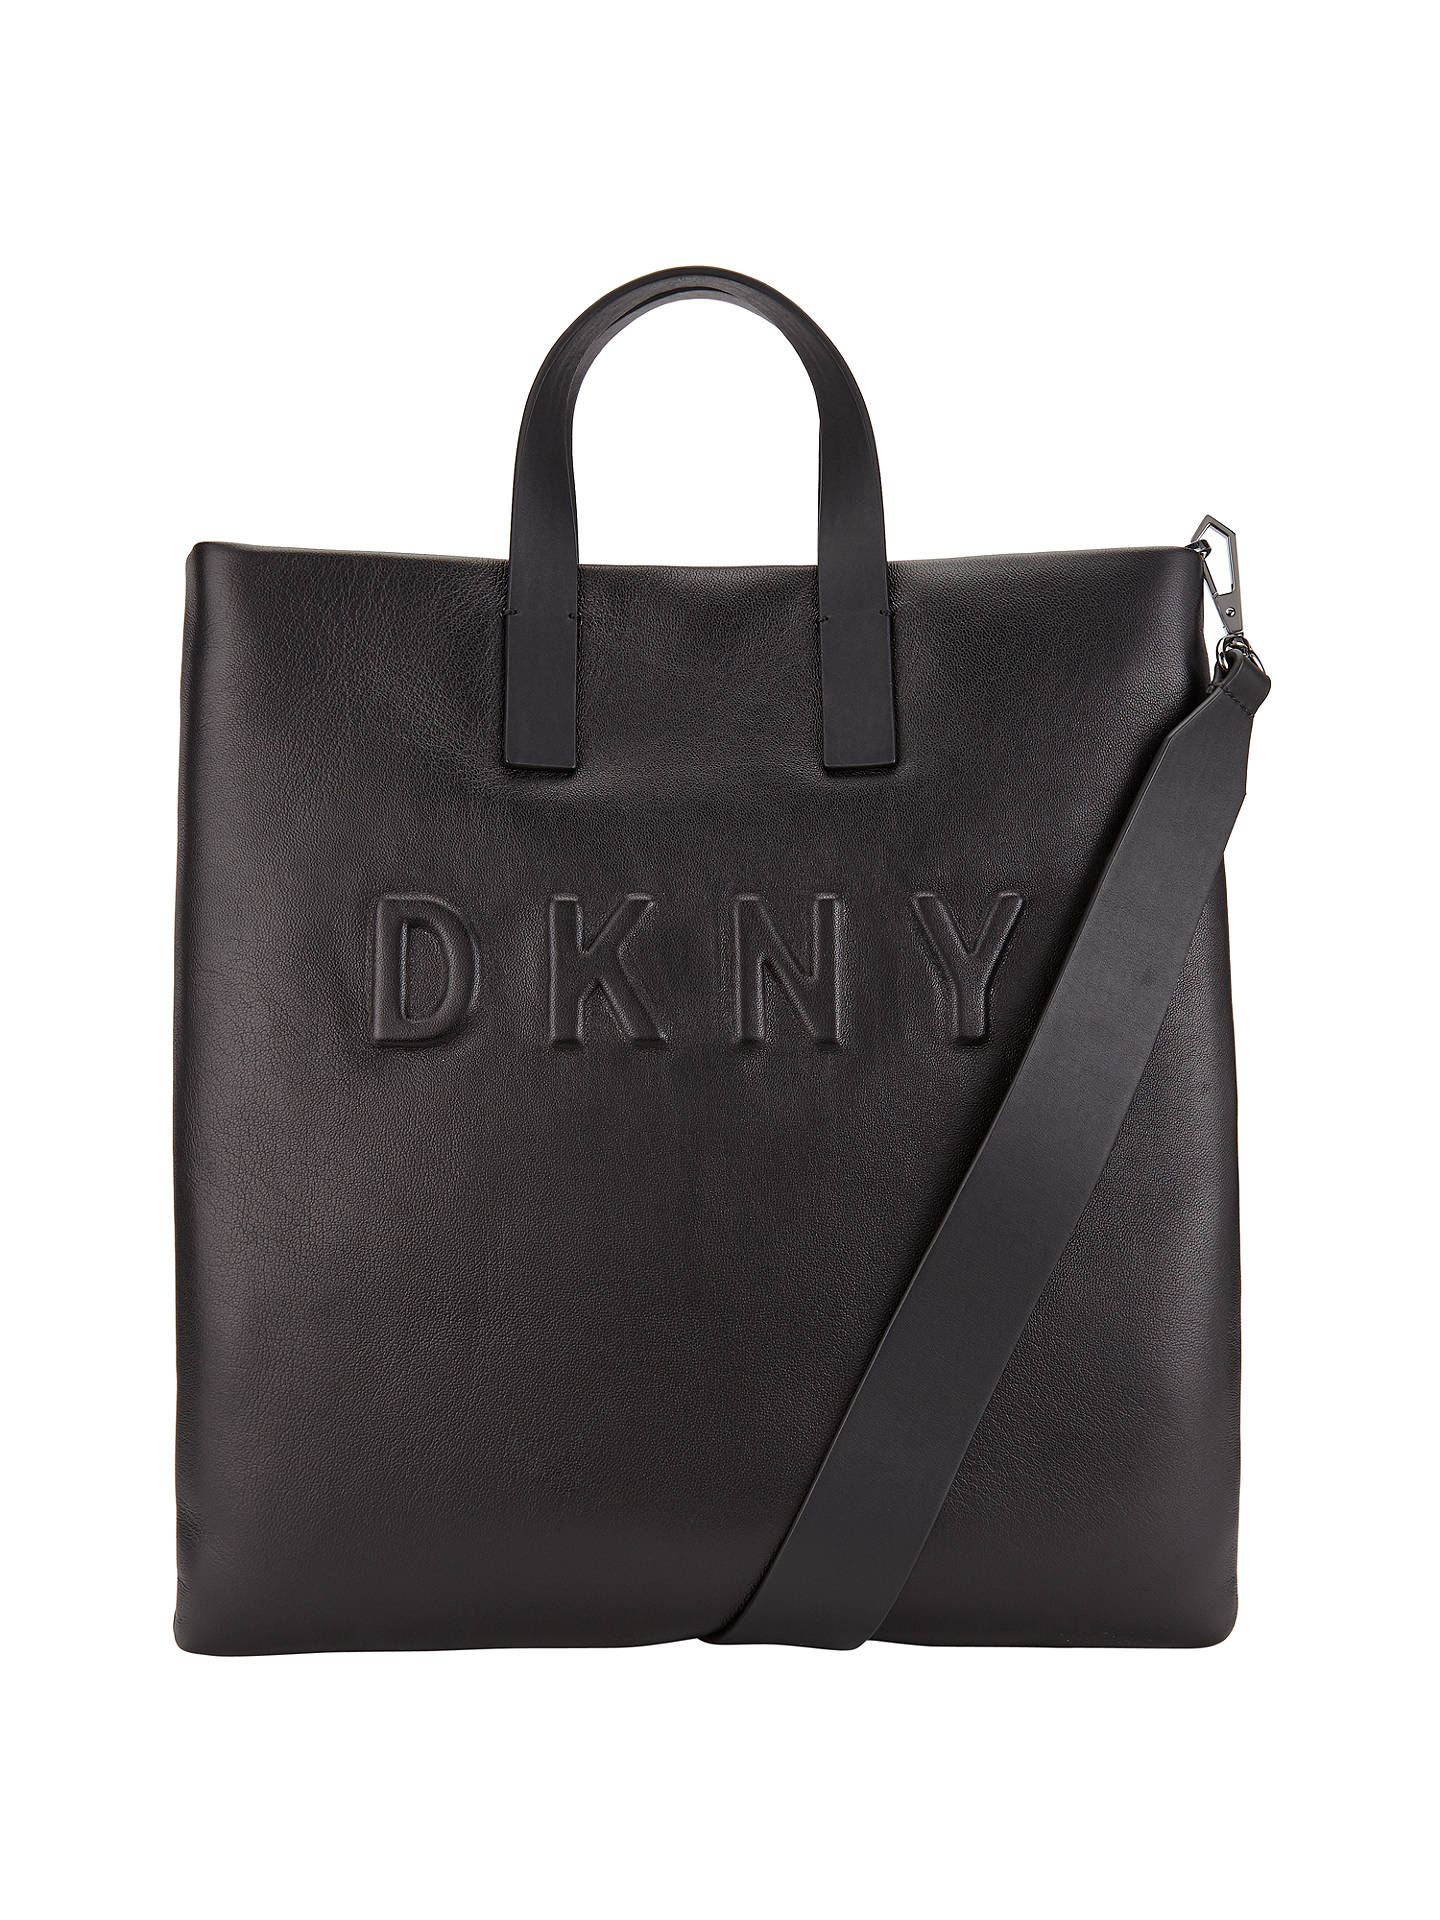 Dkny black tote bag